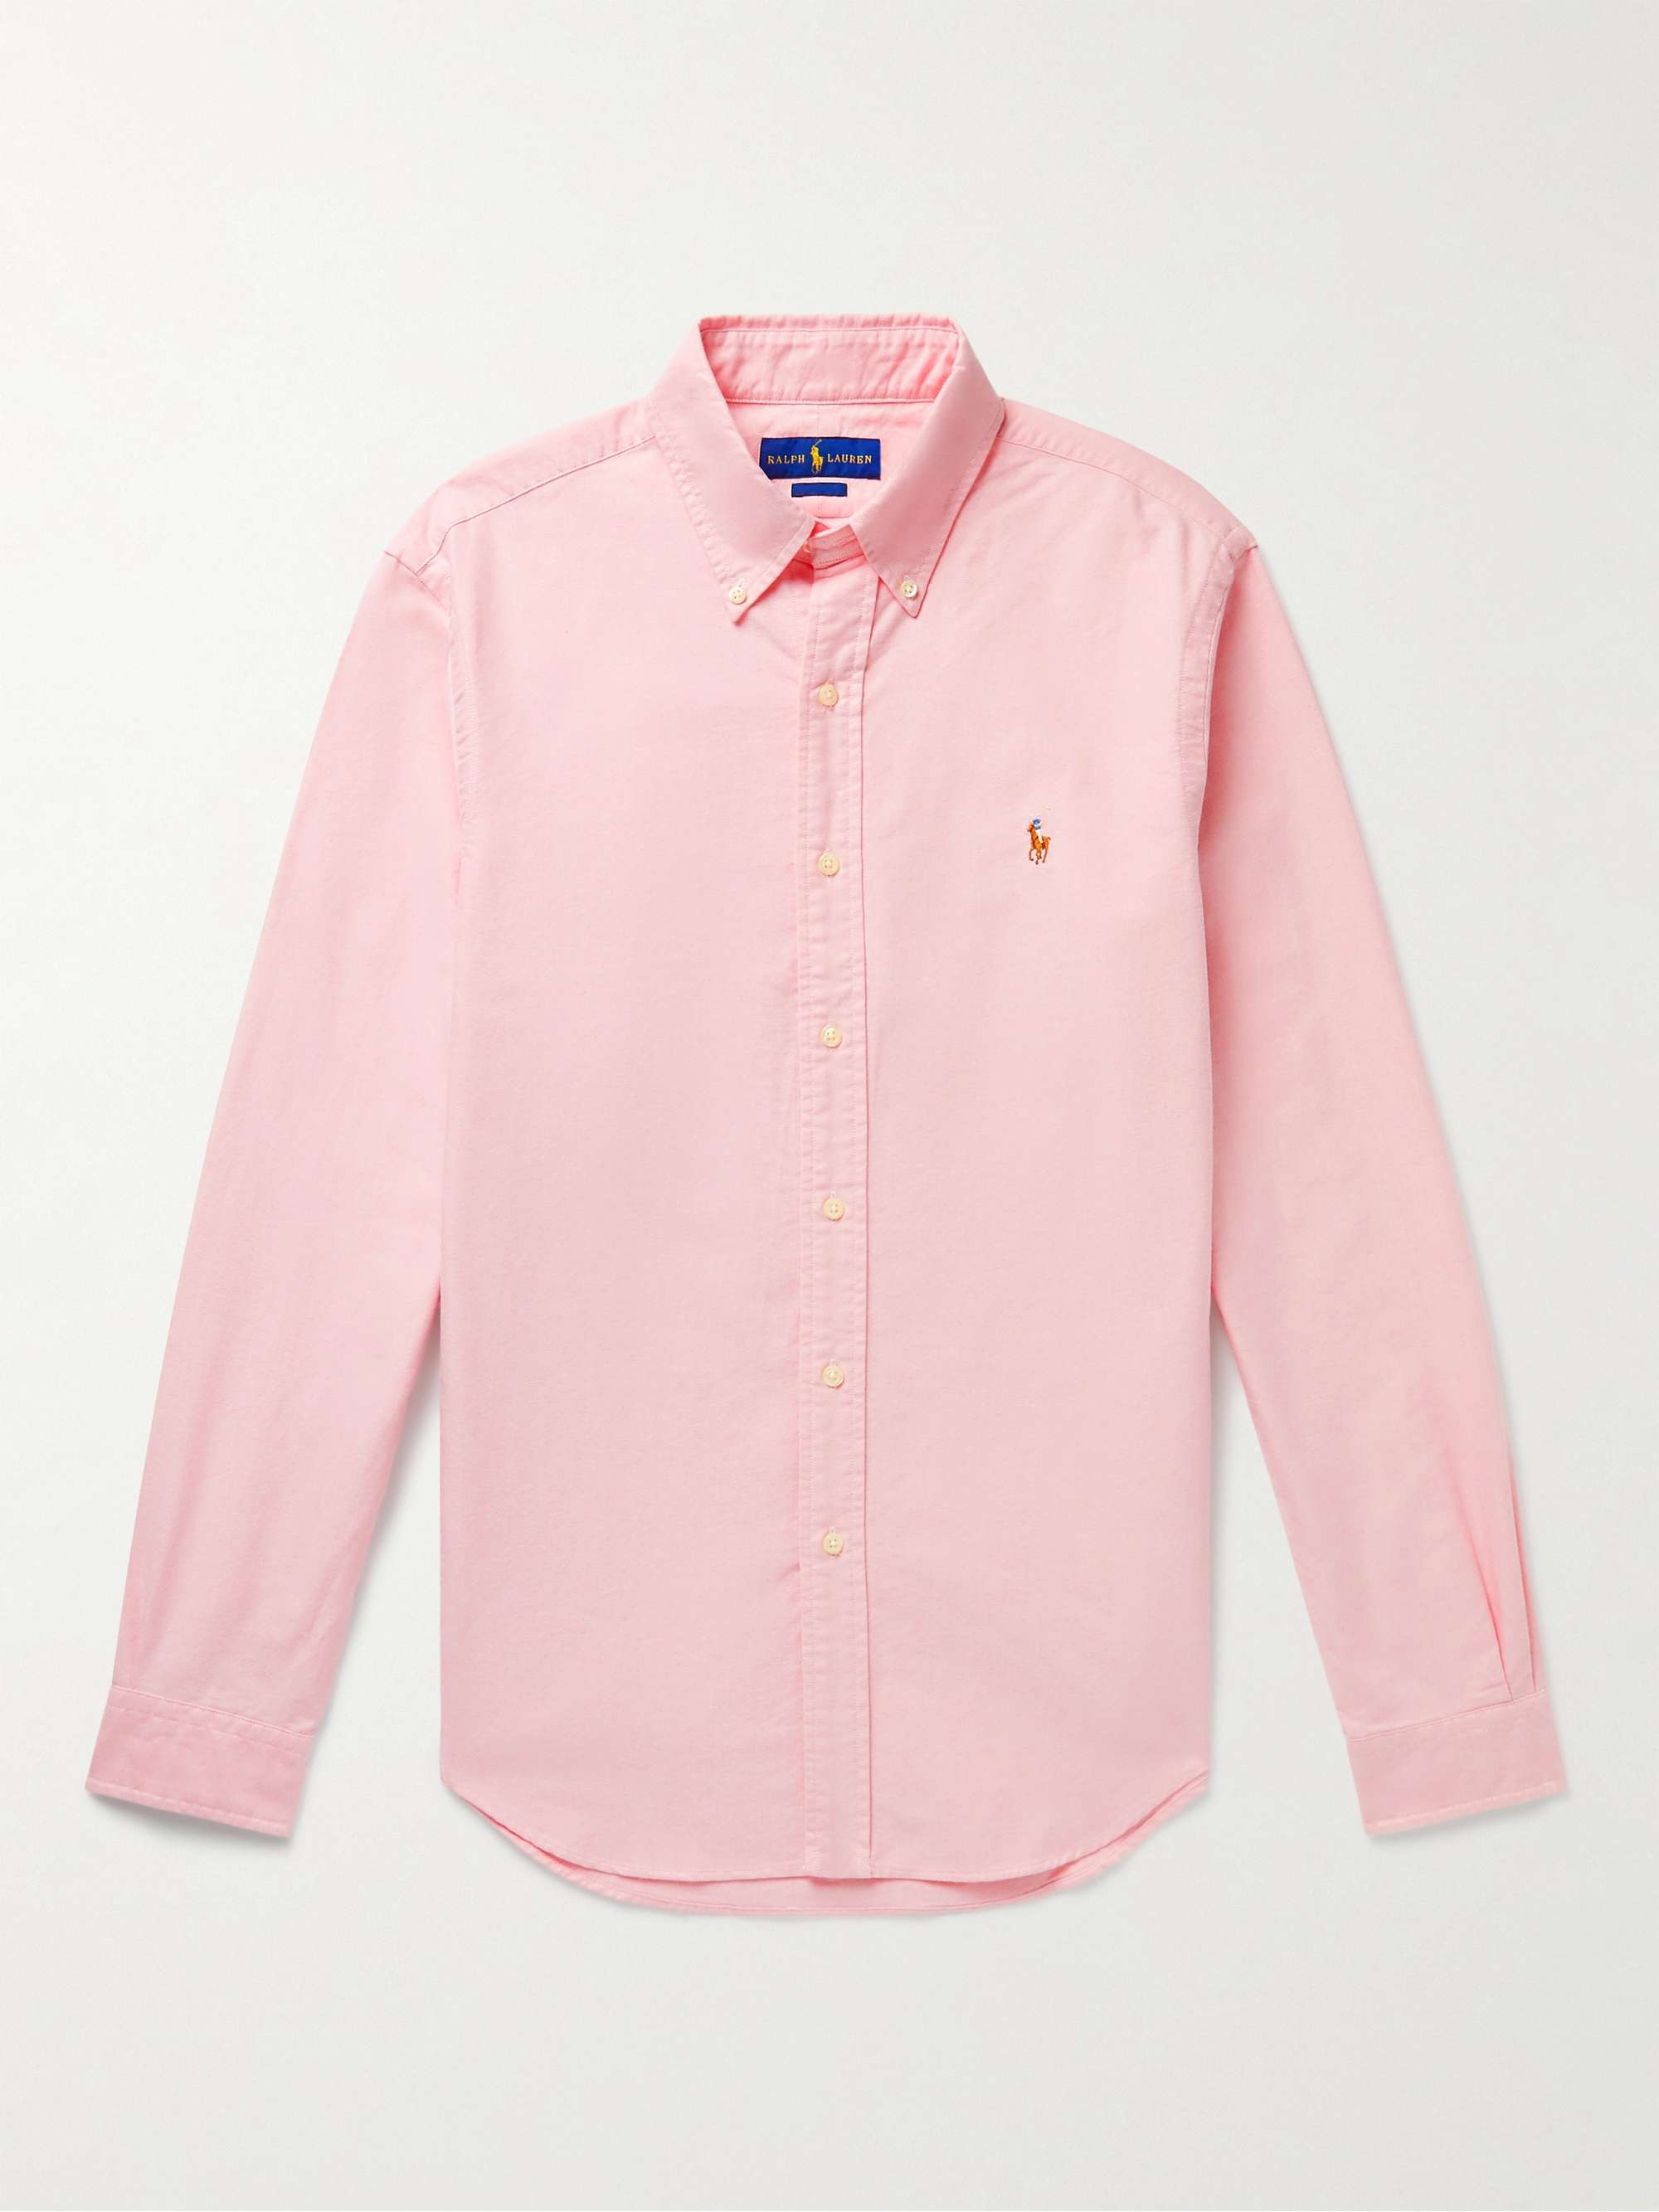 pen Contour ice cream Pink Slim-Fit Button-Down Collar Cotton Oxford Shirt | POLO RALPH LAUREN |  MR PORTER